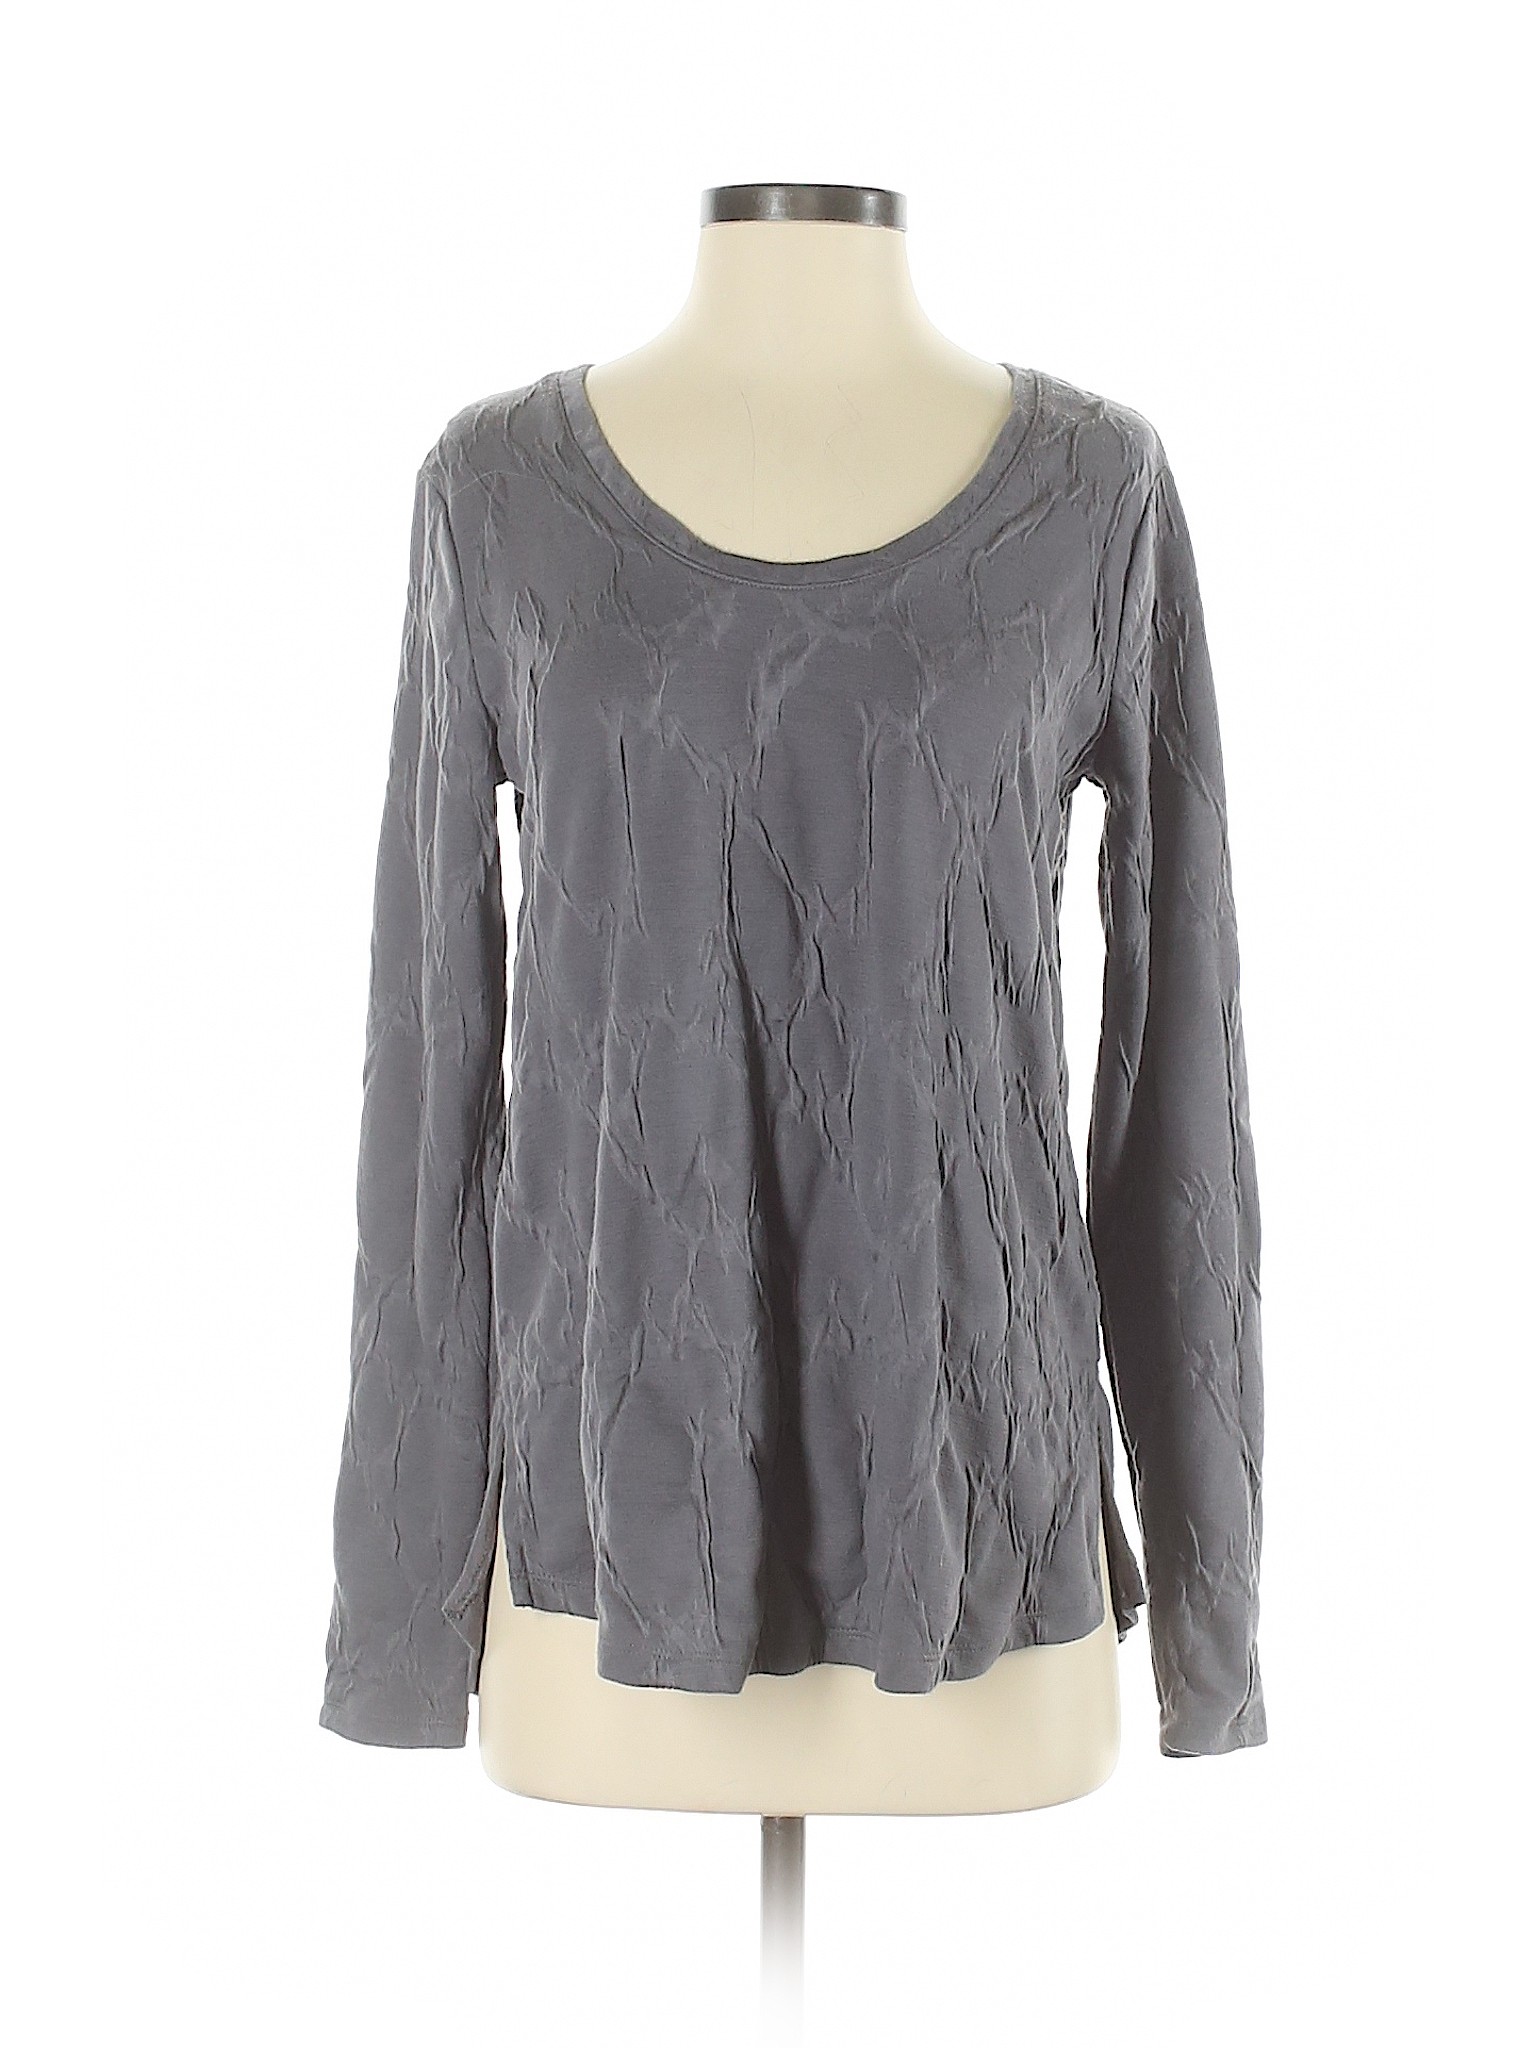 Simply Vera Vera Wang Women Gray Long Sleeve Top S | eBay